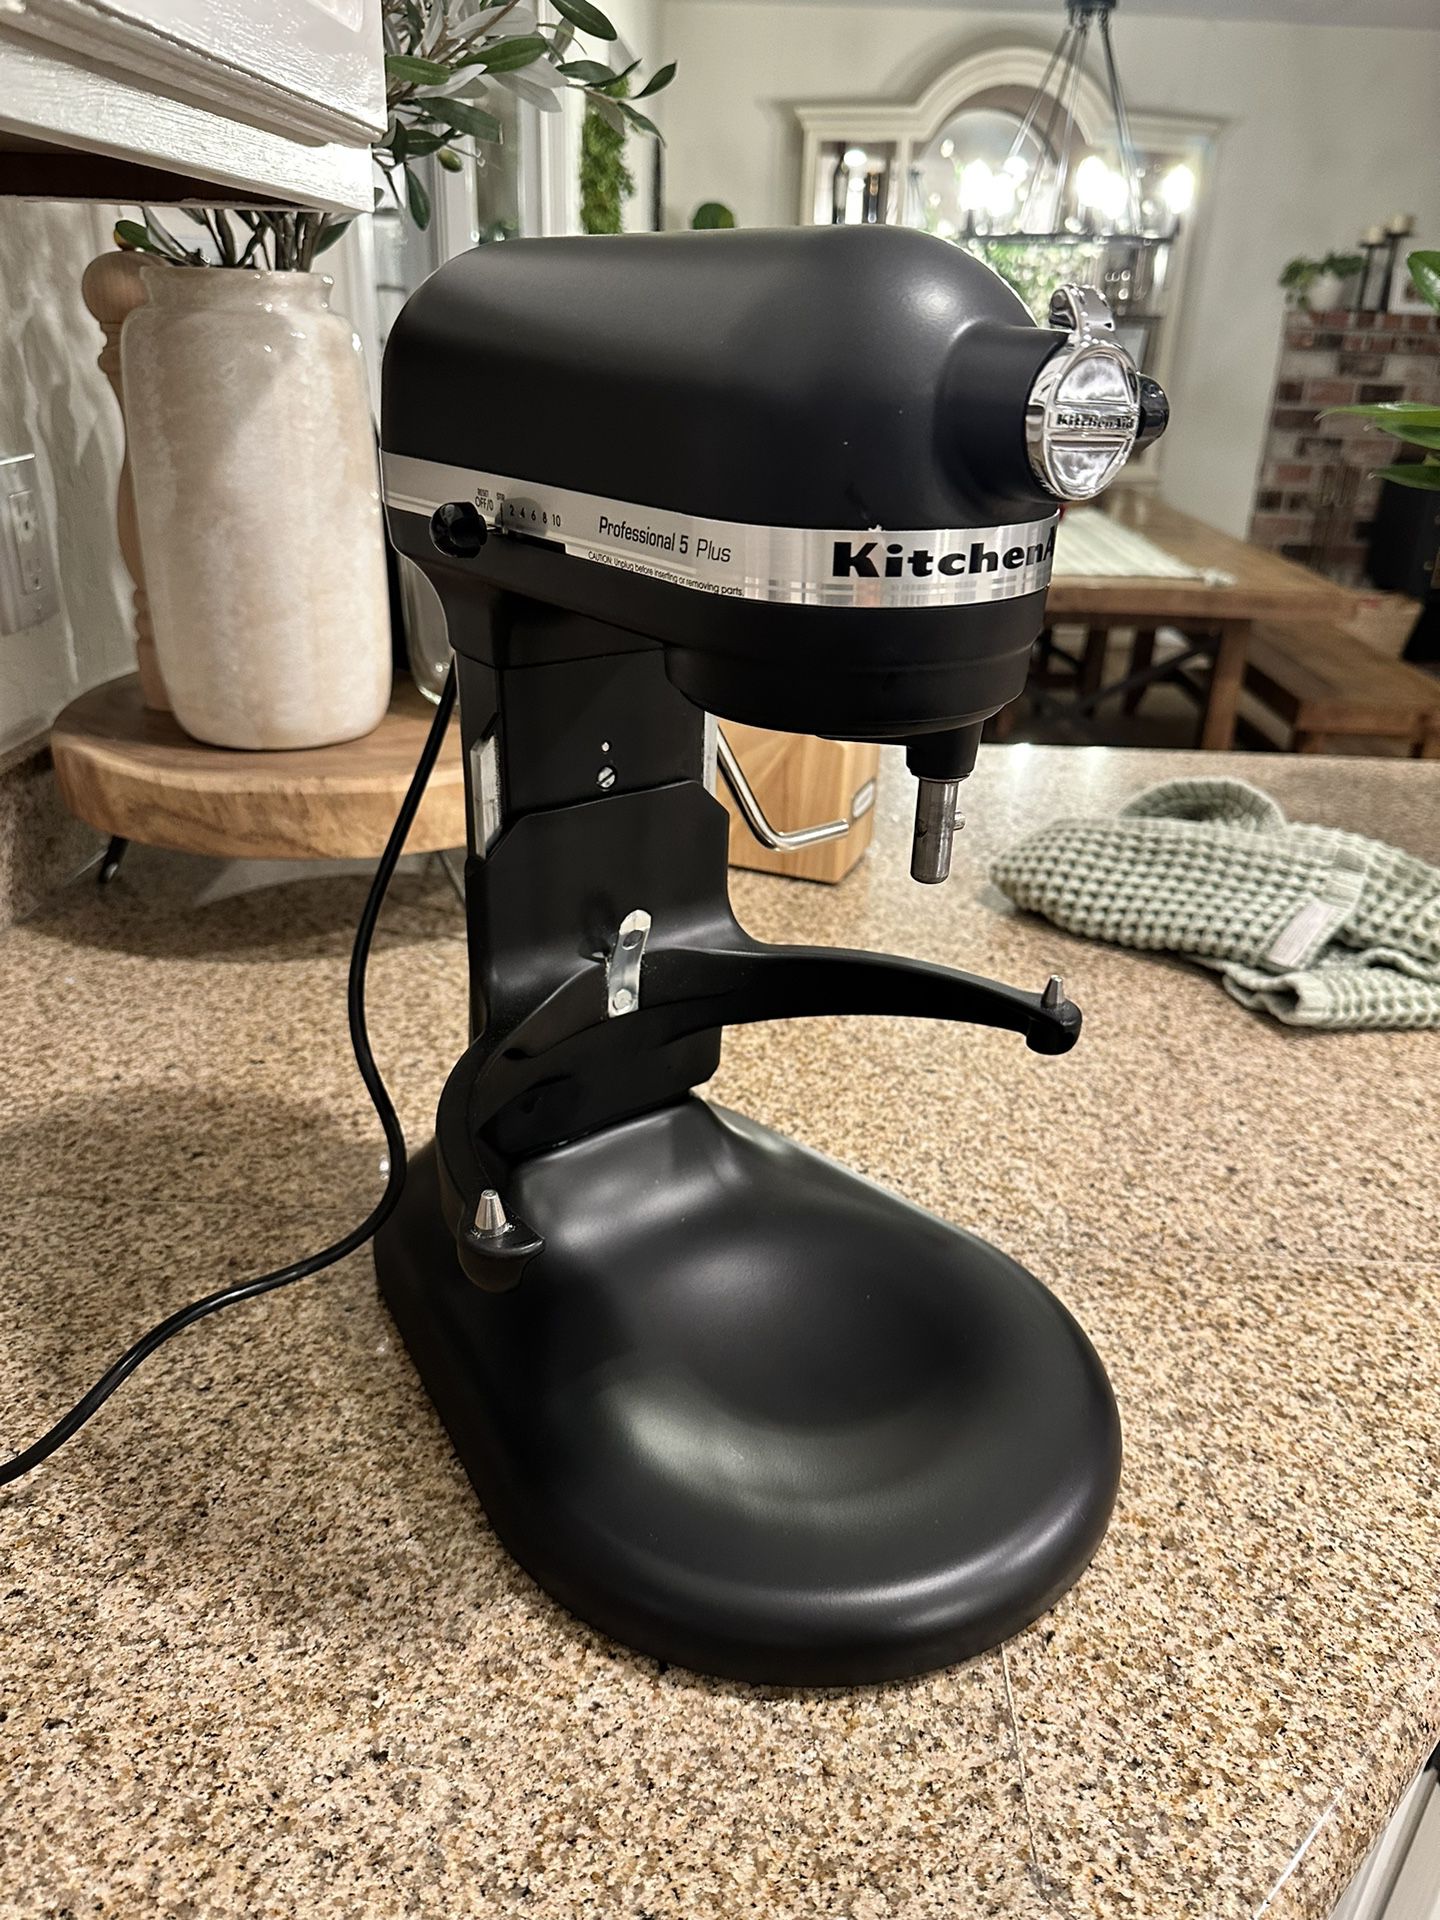 KitchenAid KSM70SKXX 7-qt. Bowl-Lift Stand Mixer for Sale in Arlington, TX  - OfferUp